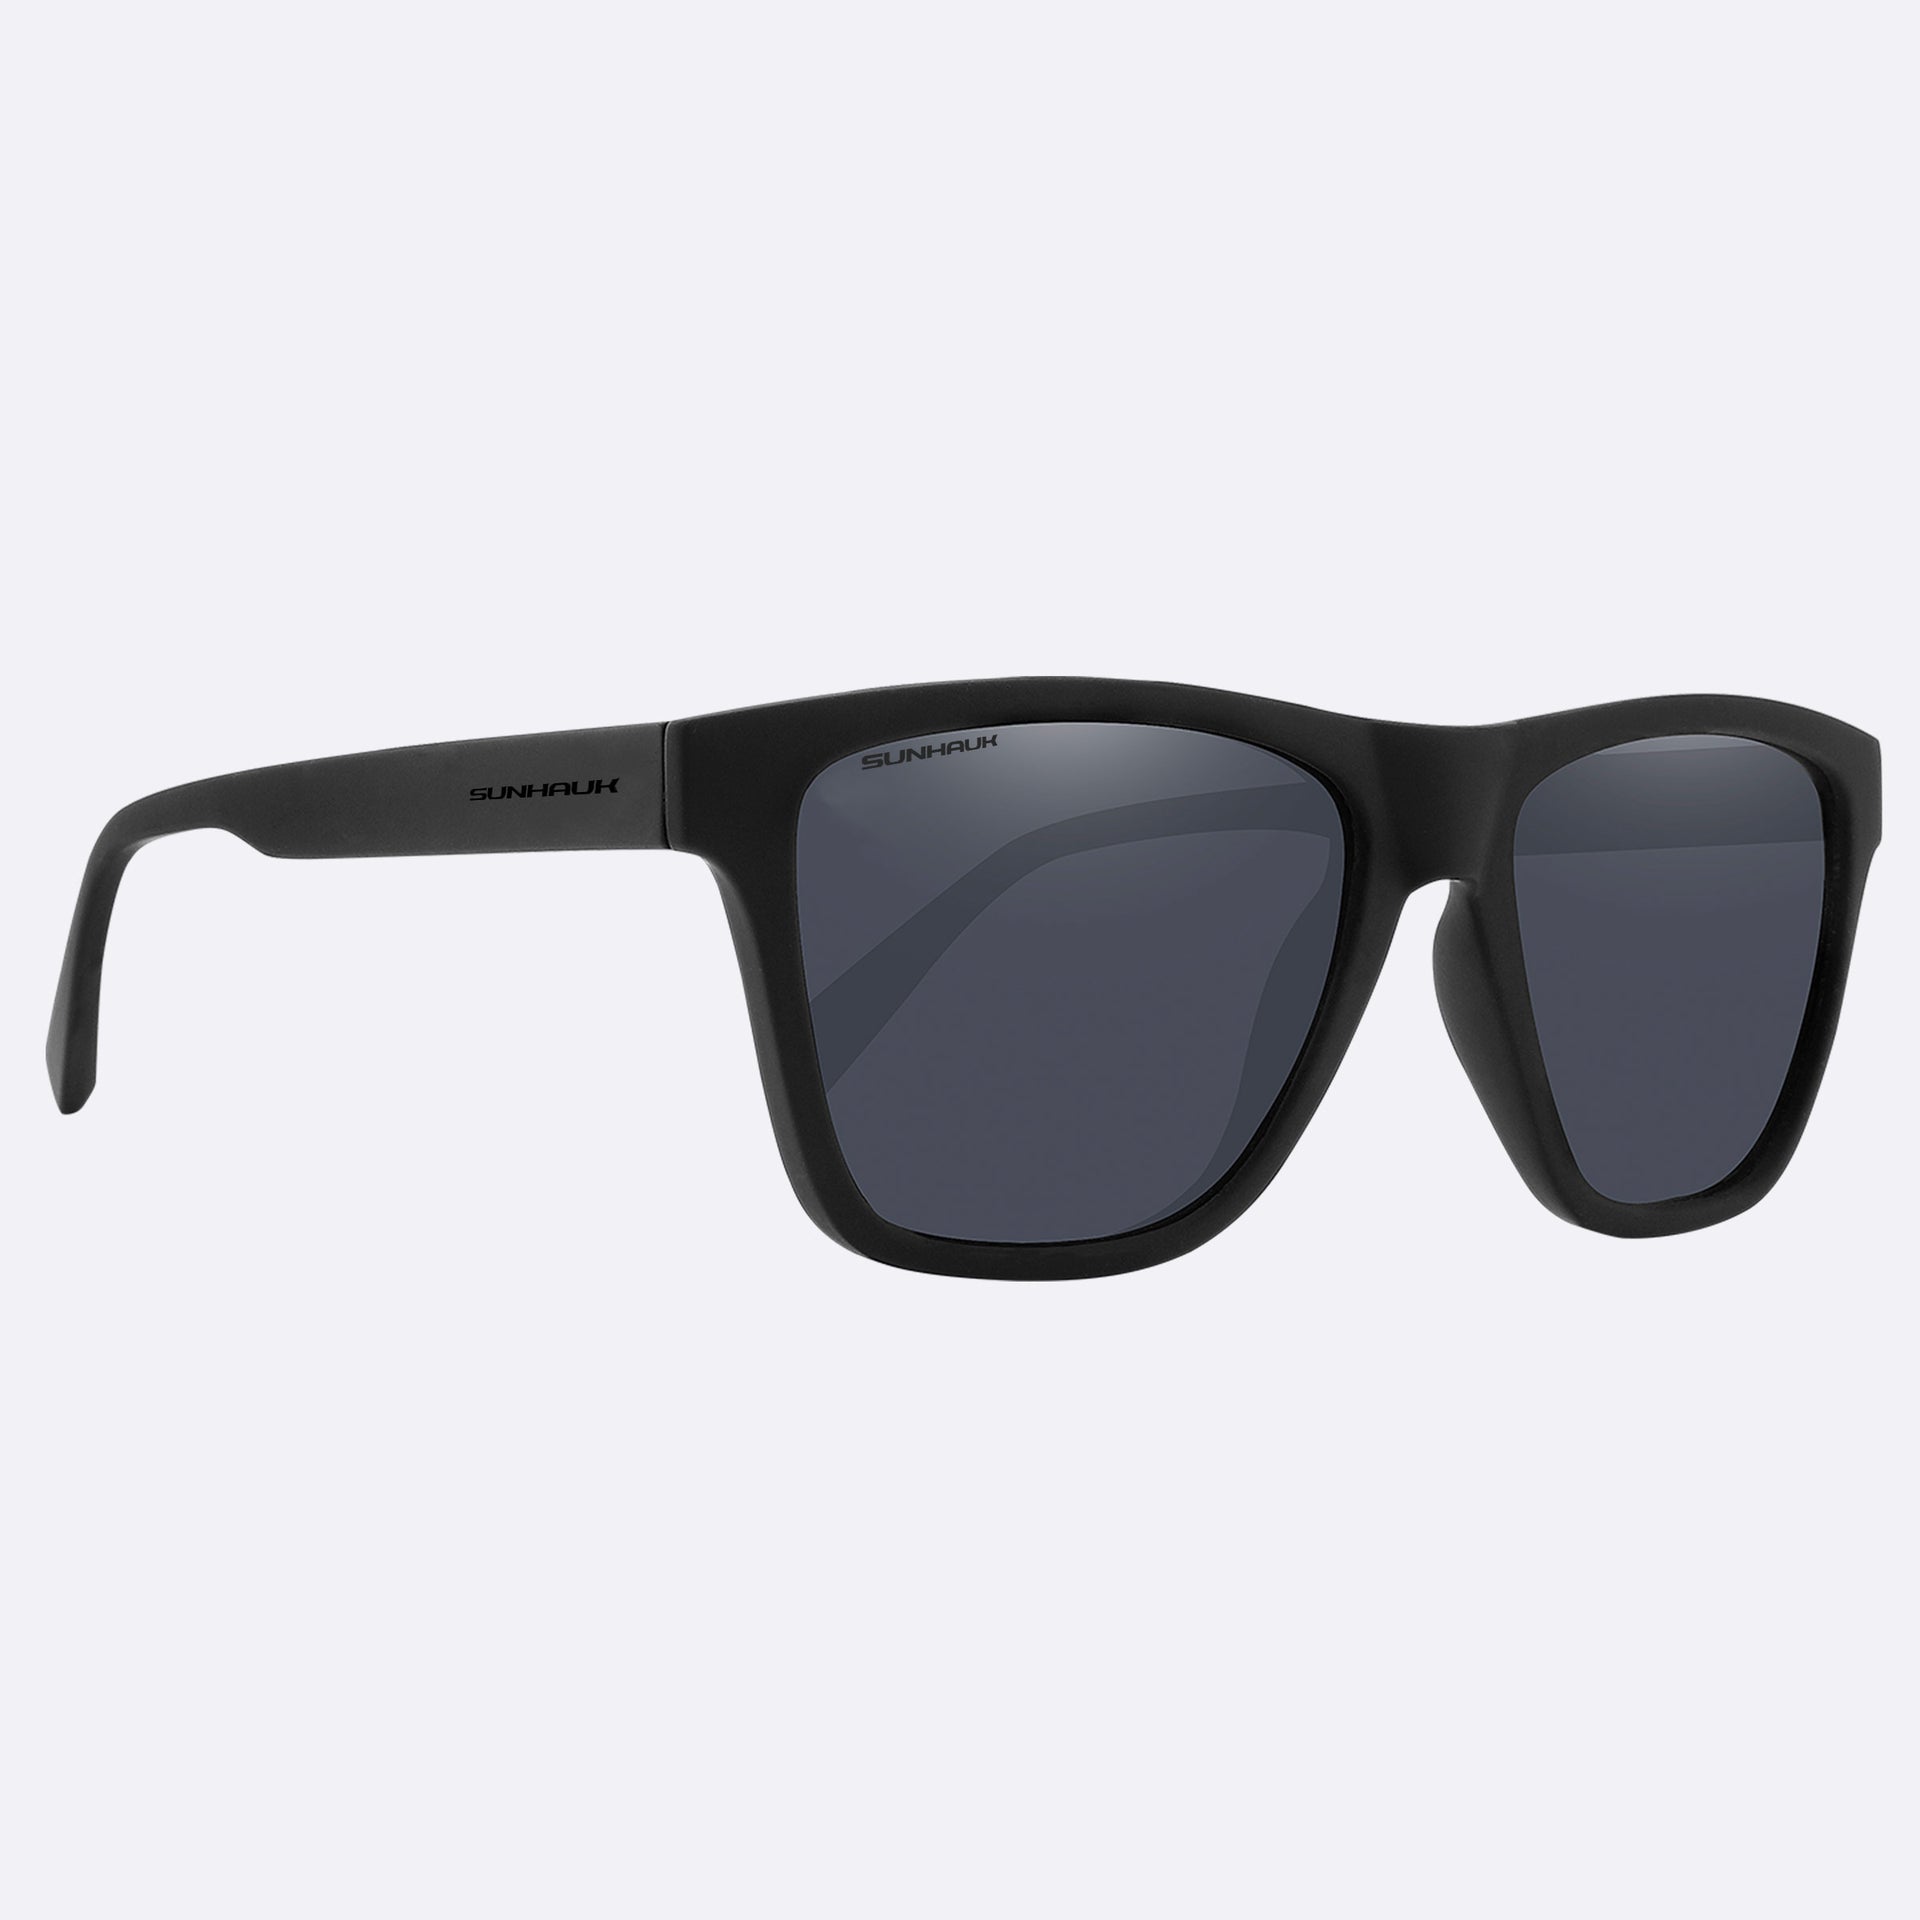 Super Black - Black Polarized Sunglasses